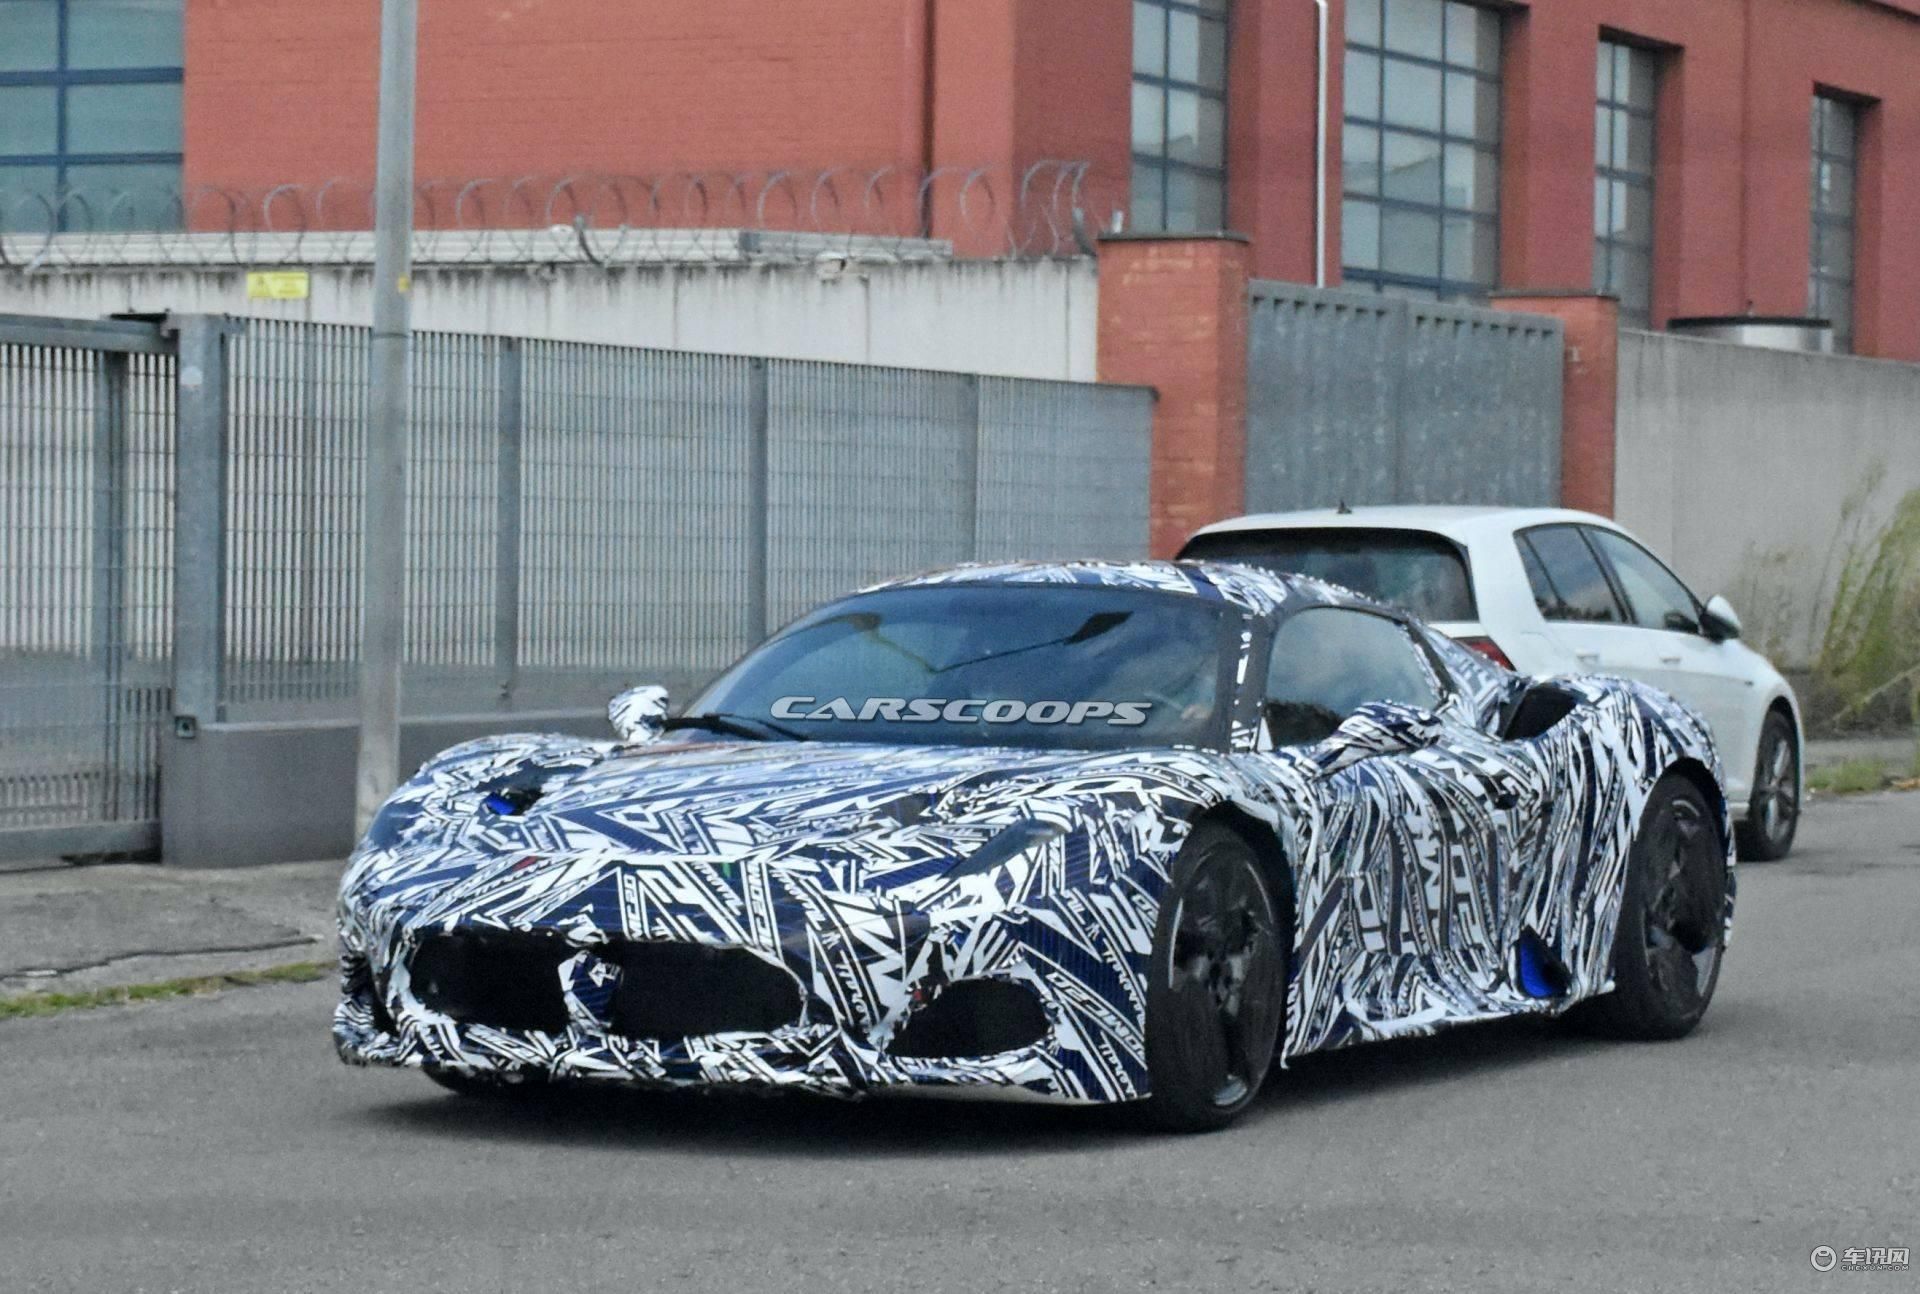 2021-Maserati-MC20-spy-shots-28.jpg